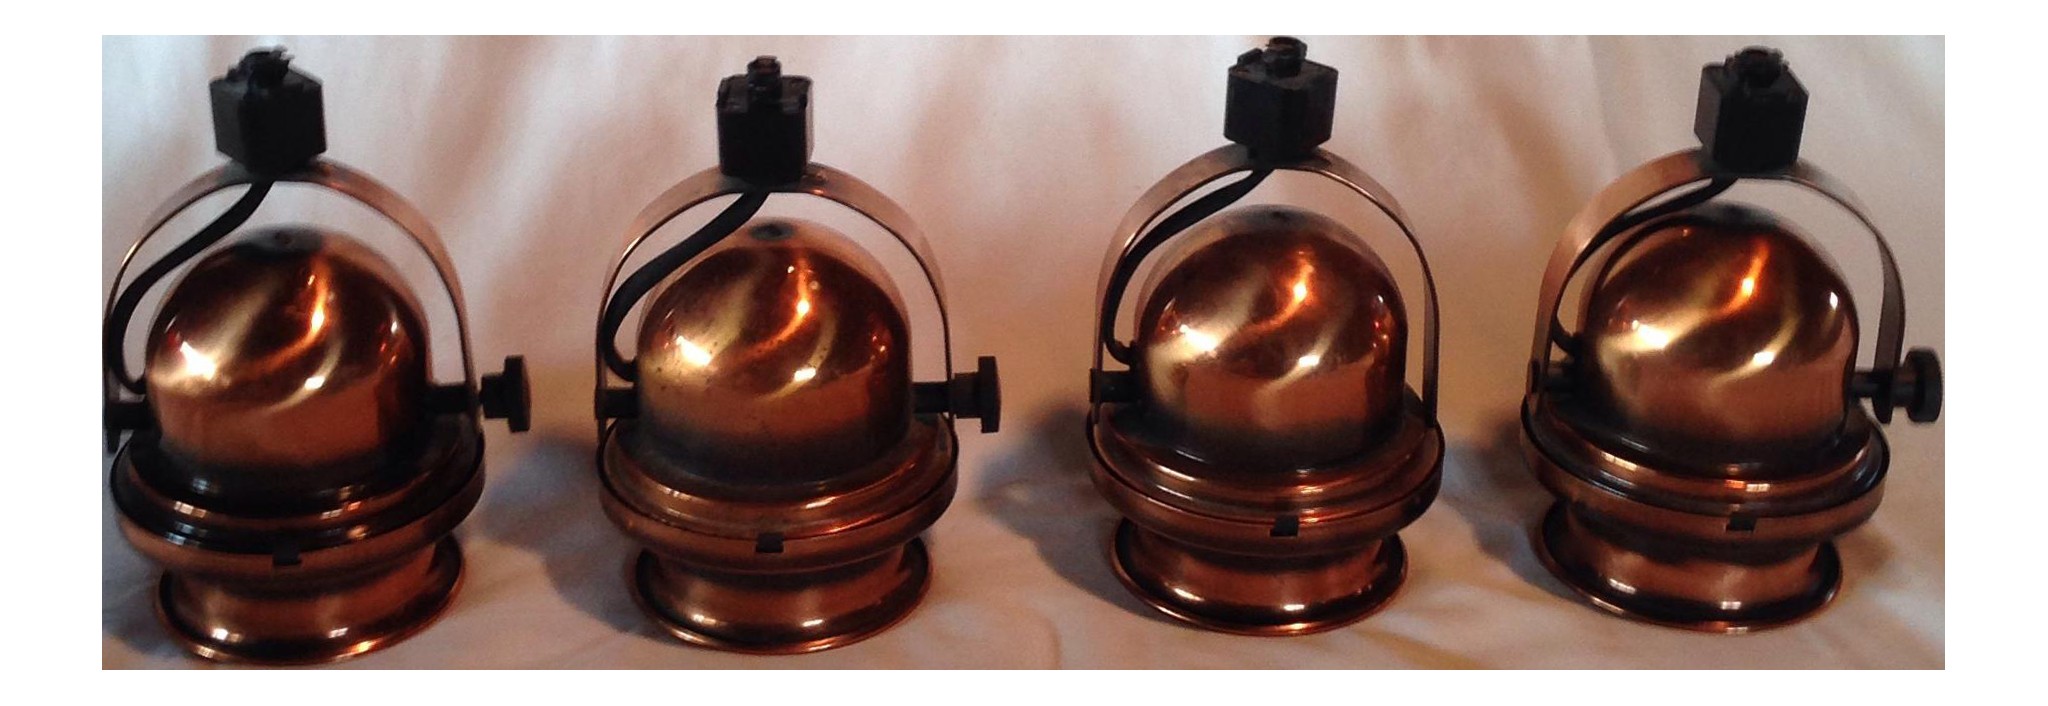 Vintage copper track light fixtures set of 4 chairish